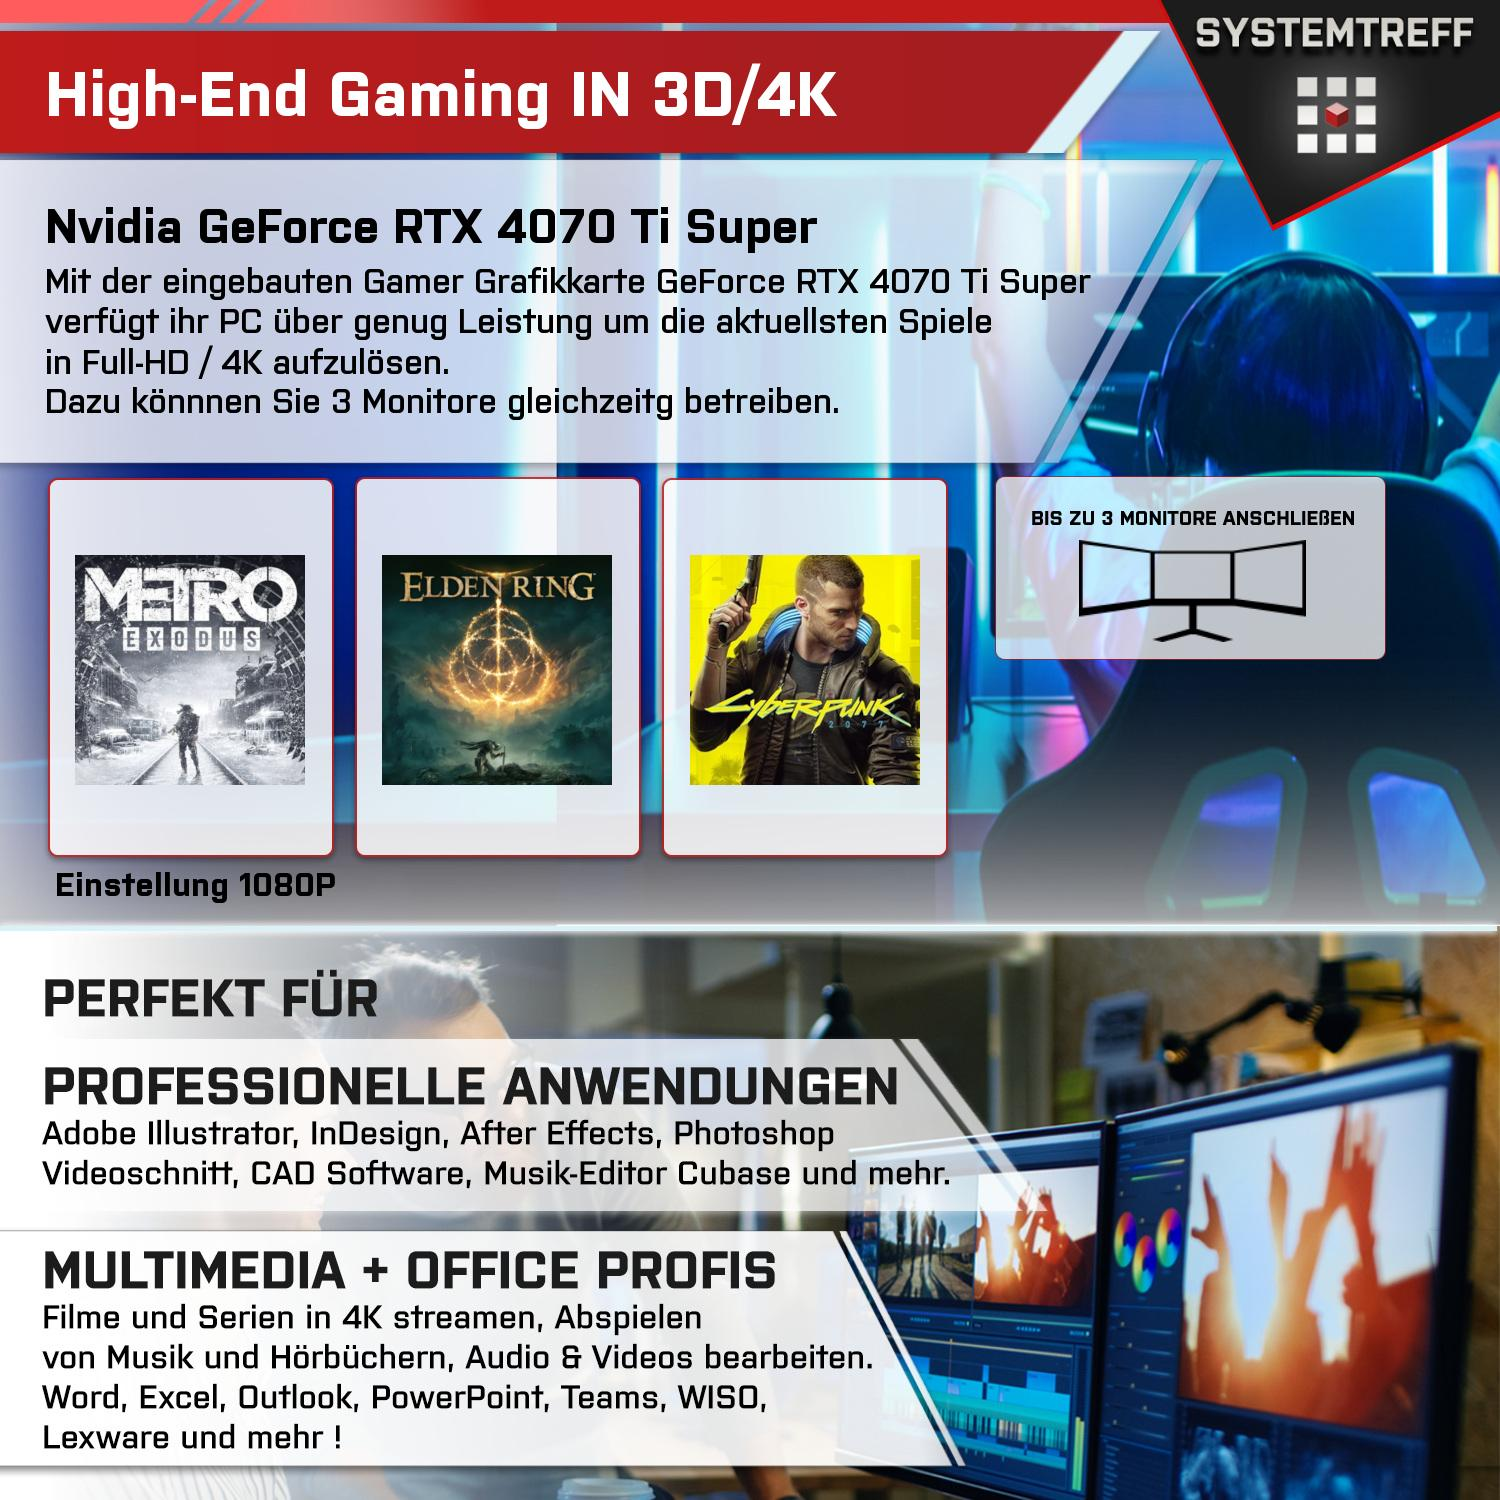 SYSTEMTREFF High-End Gaming AMD GB NVIDIA 11 32 Prozessor, RAM, Ryzen™ 7 Windows 7 RTX™ 1000 PC Gaming GeForce 7700, Ti mit 4070 AMD Ryzen Super™ Pro, mSSD, GB